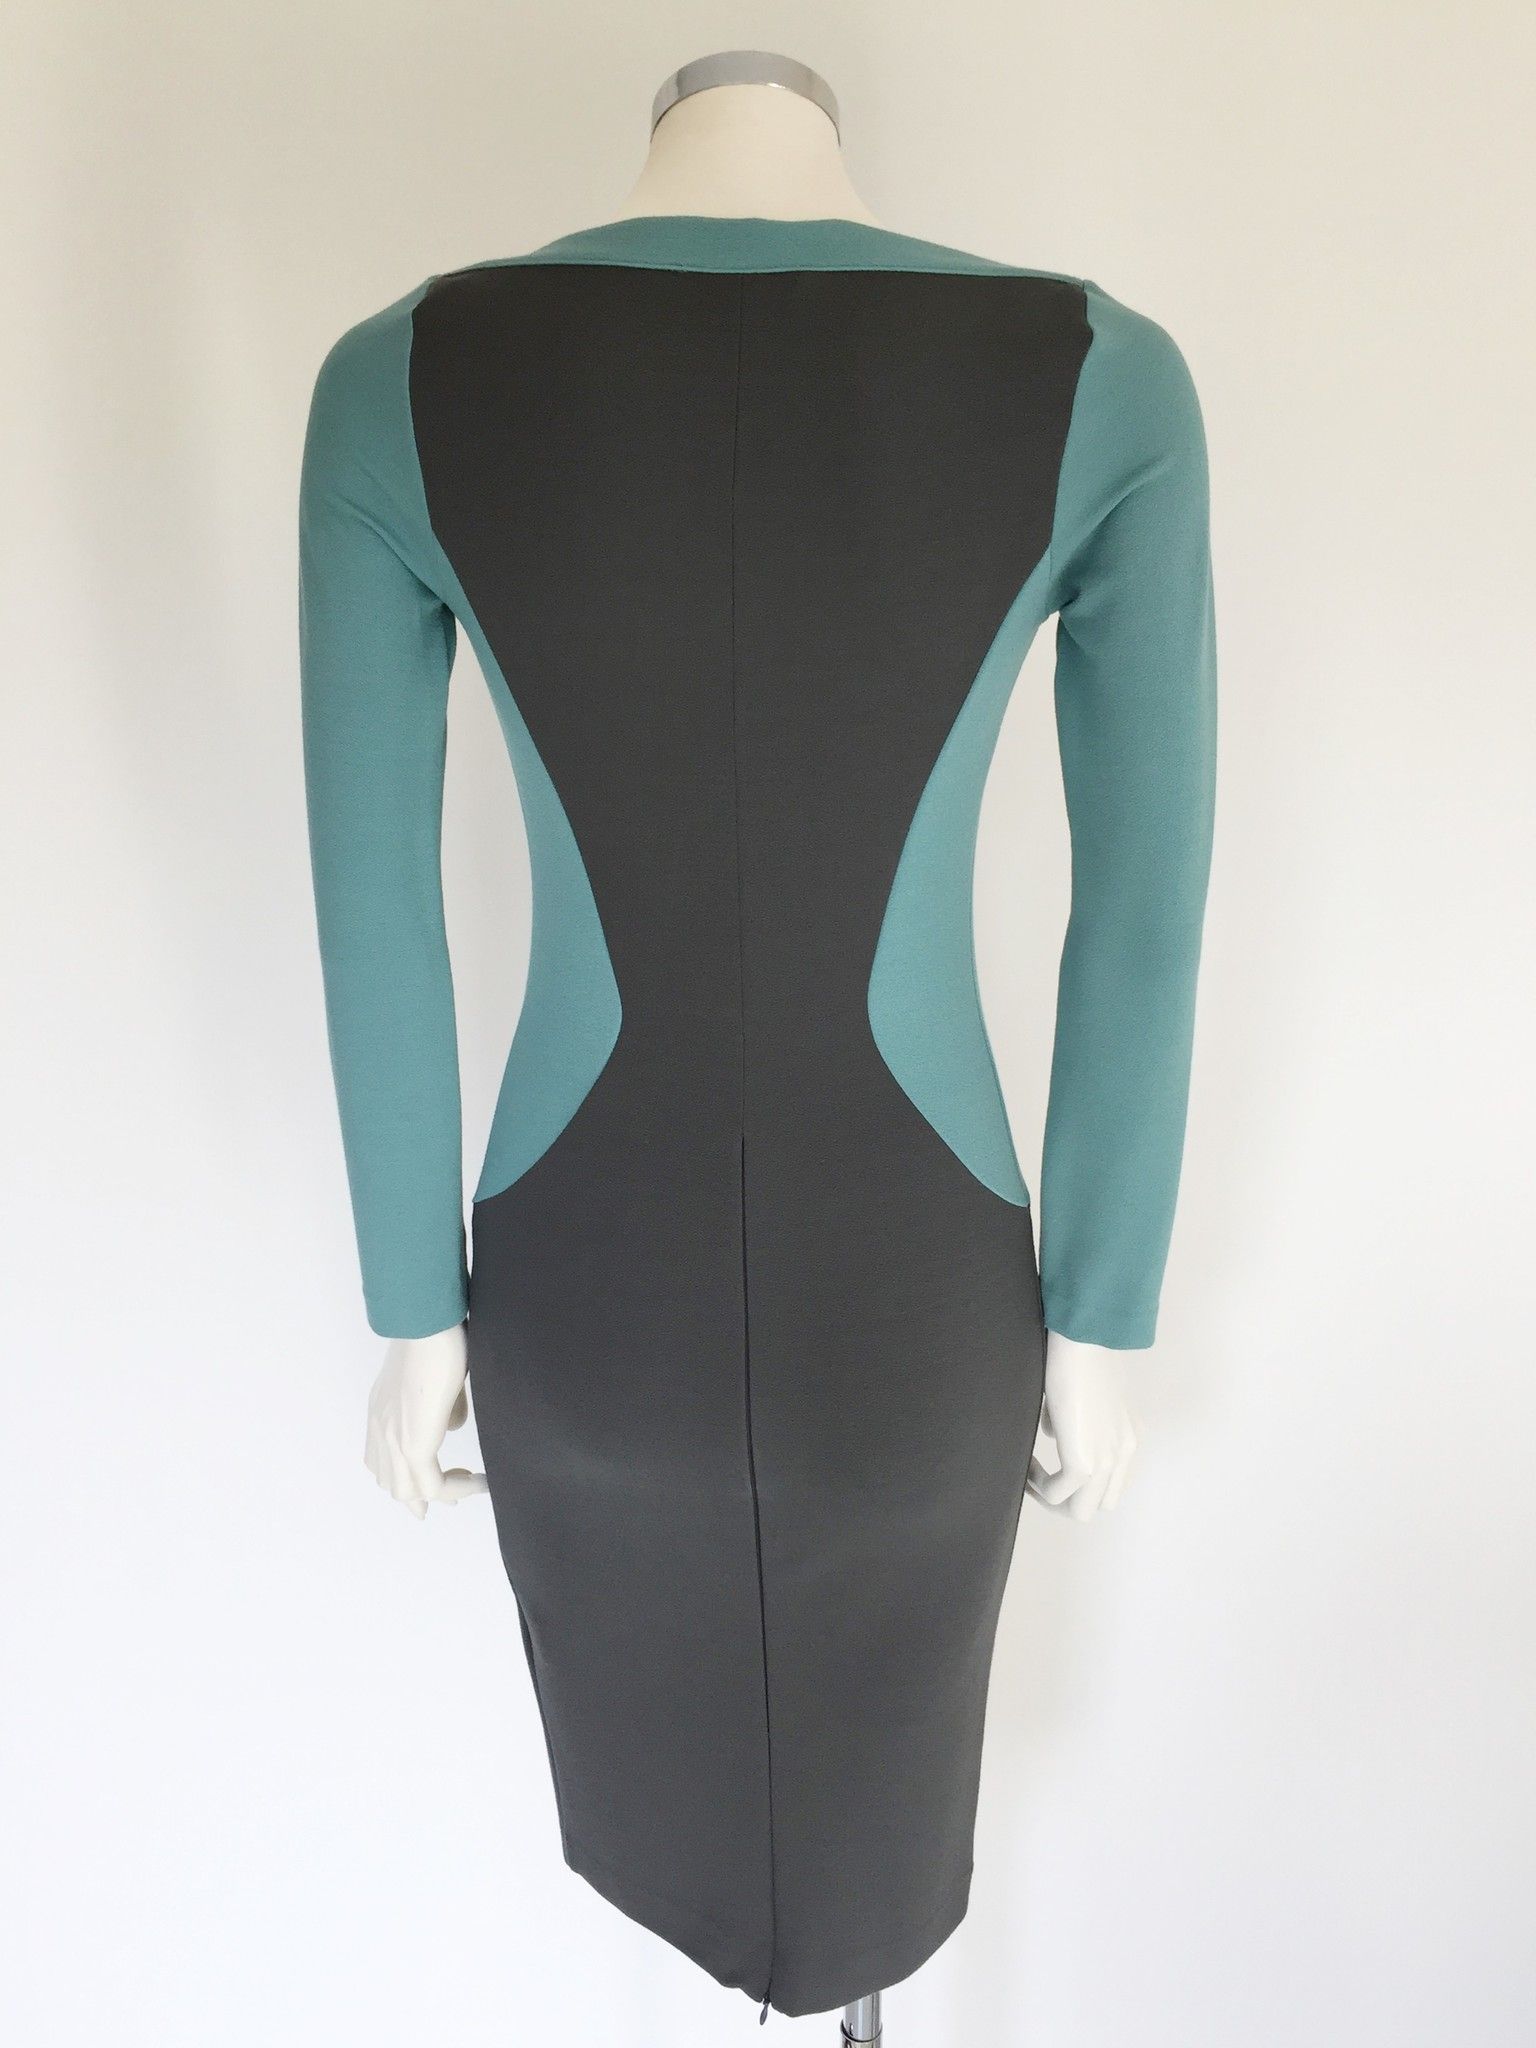 Adele Fado Long sleeve dress Cod.67575